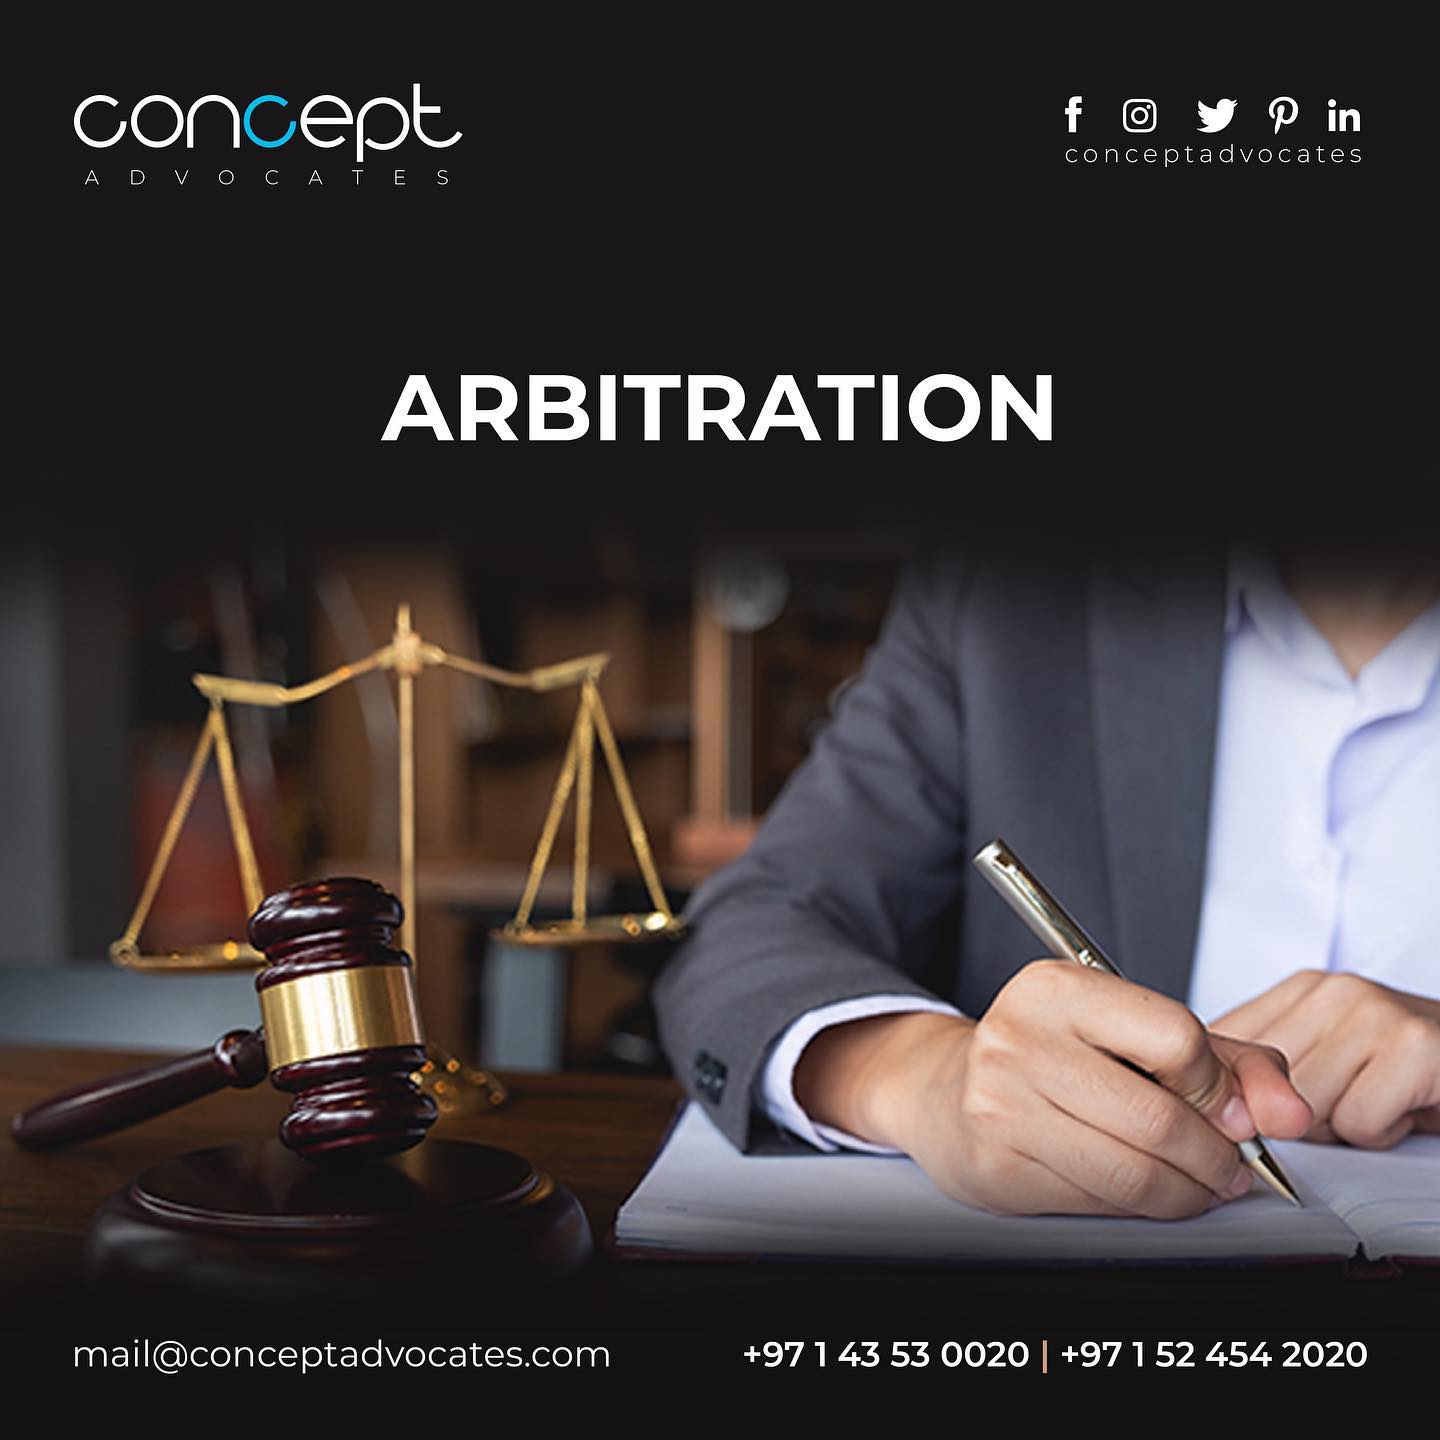 Our services Arbitration #arbitration #arbitrationlaw #uaelaw